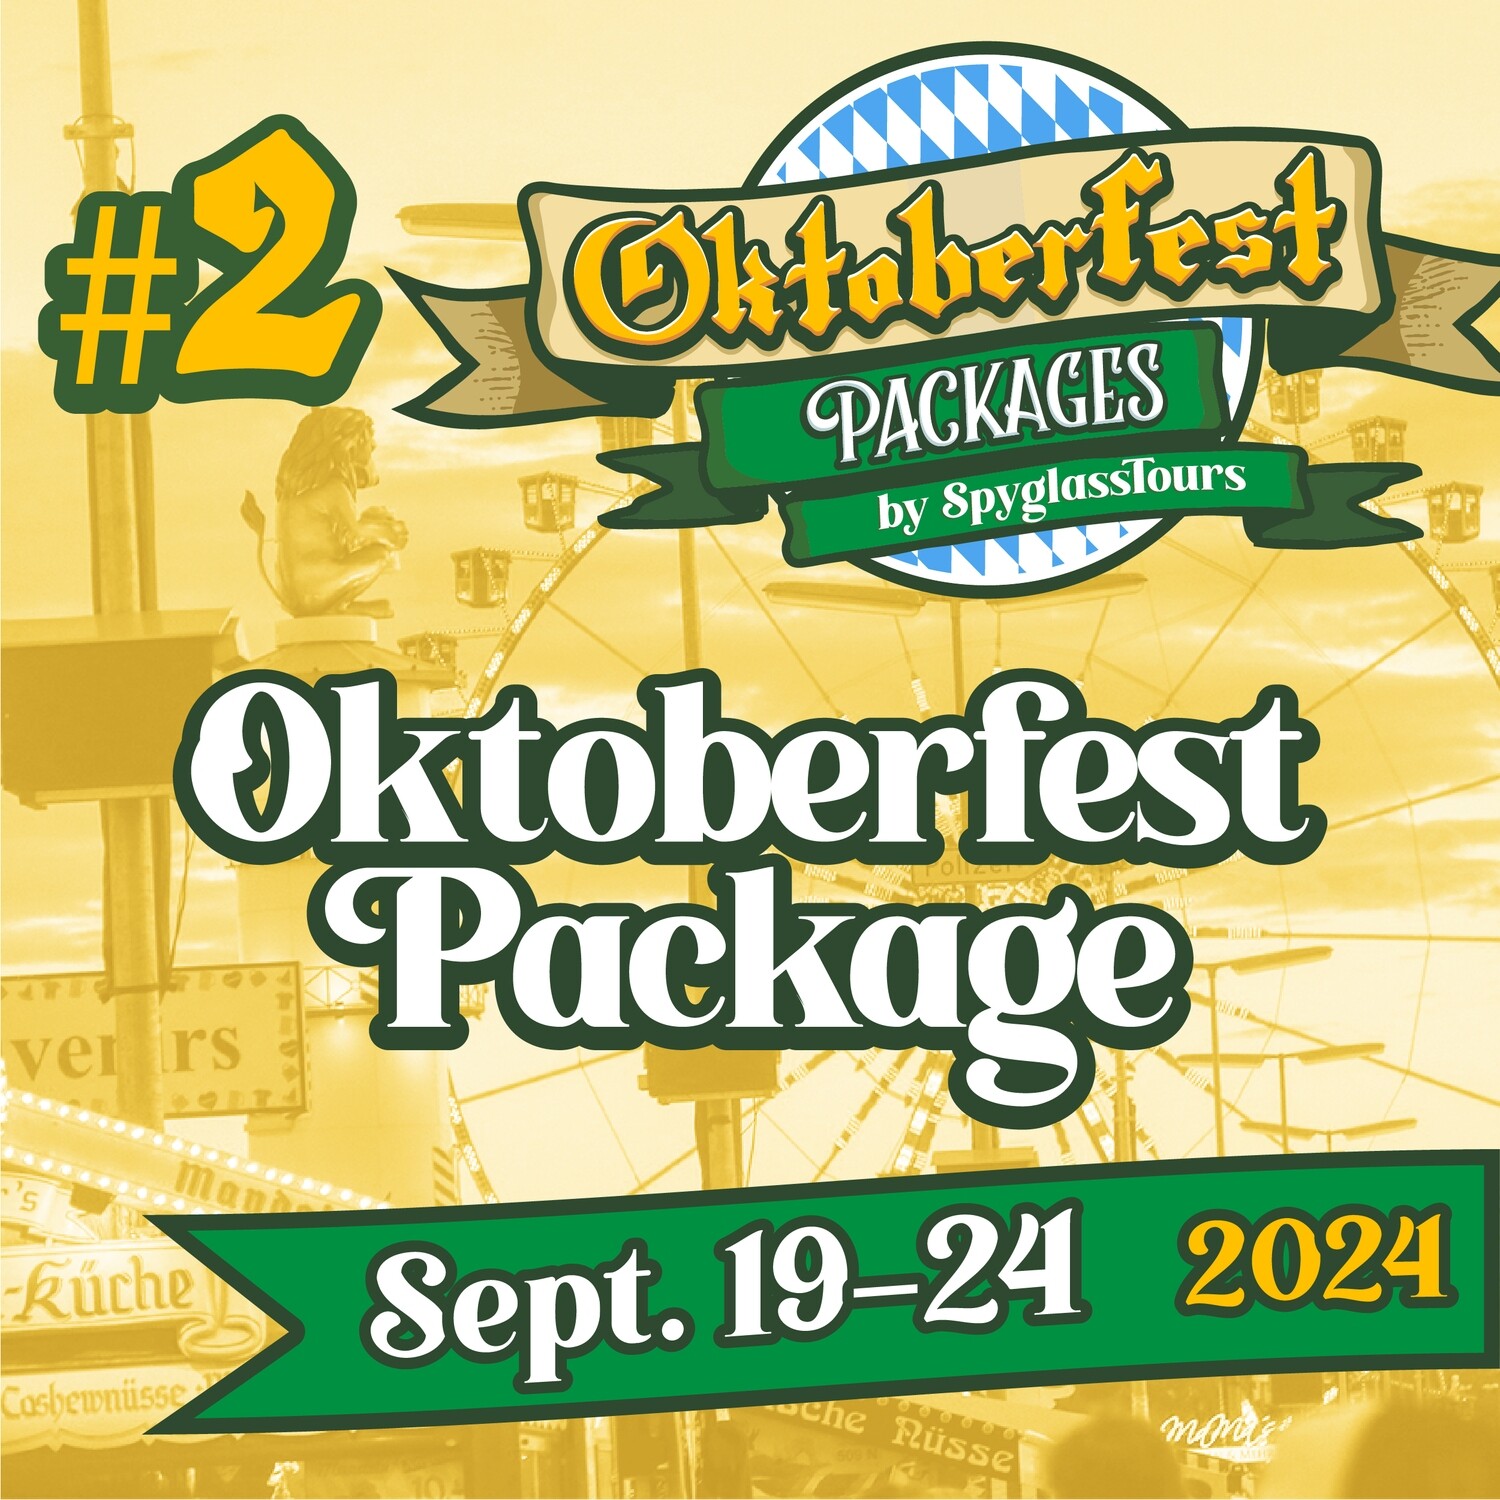 Oktoberfest Package 2 Sept. 1924, 2024